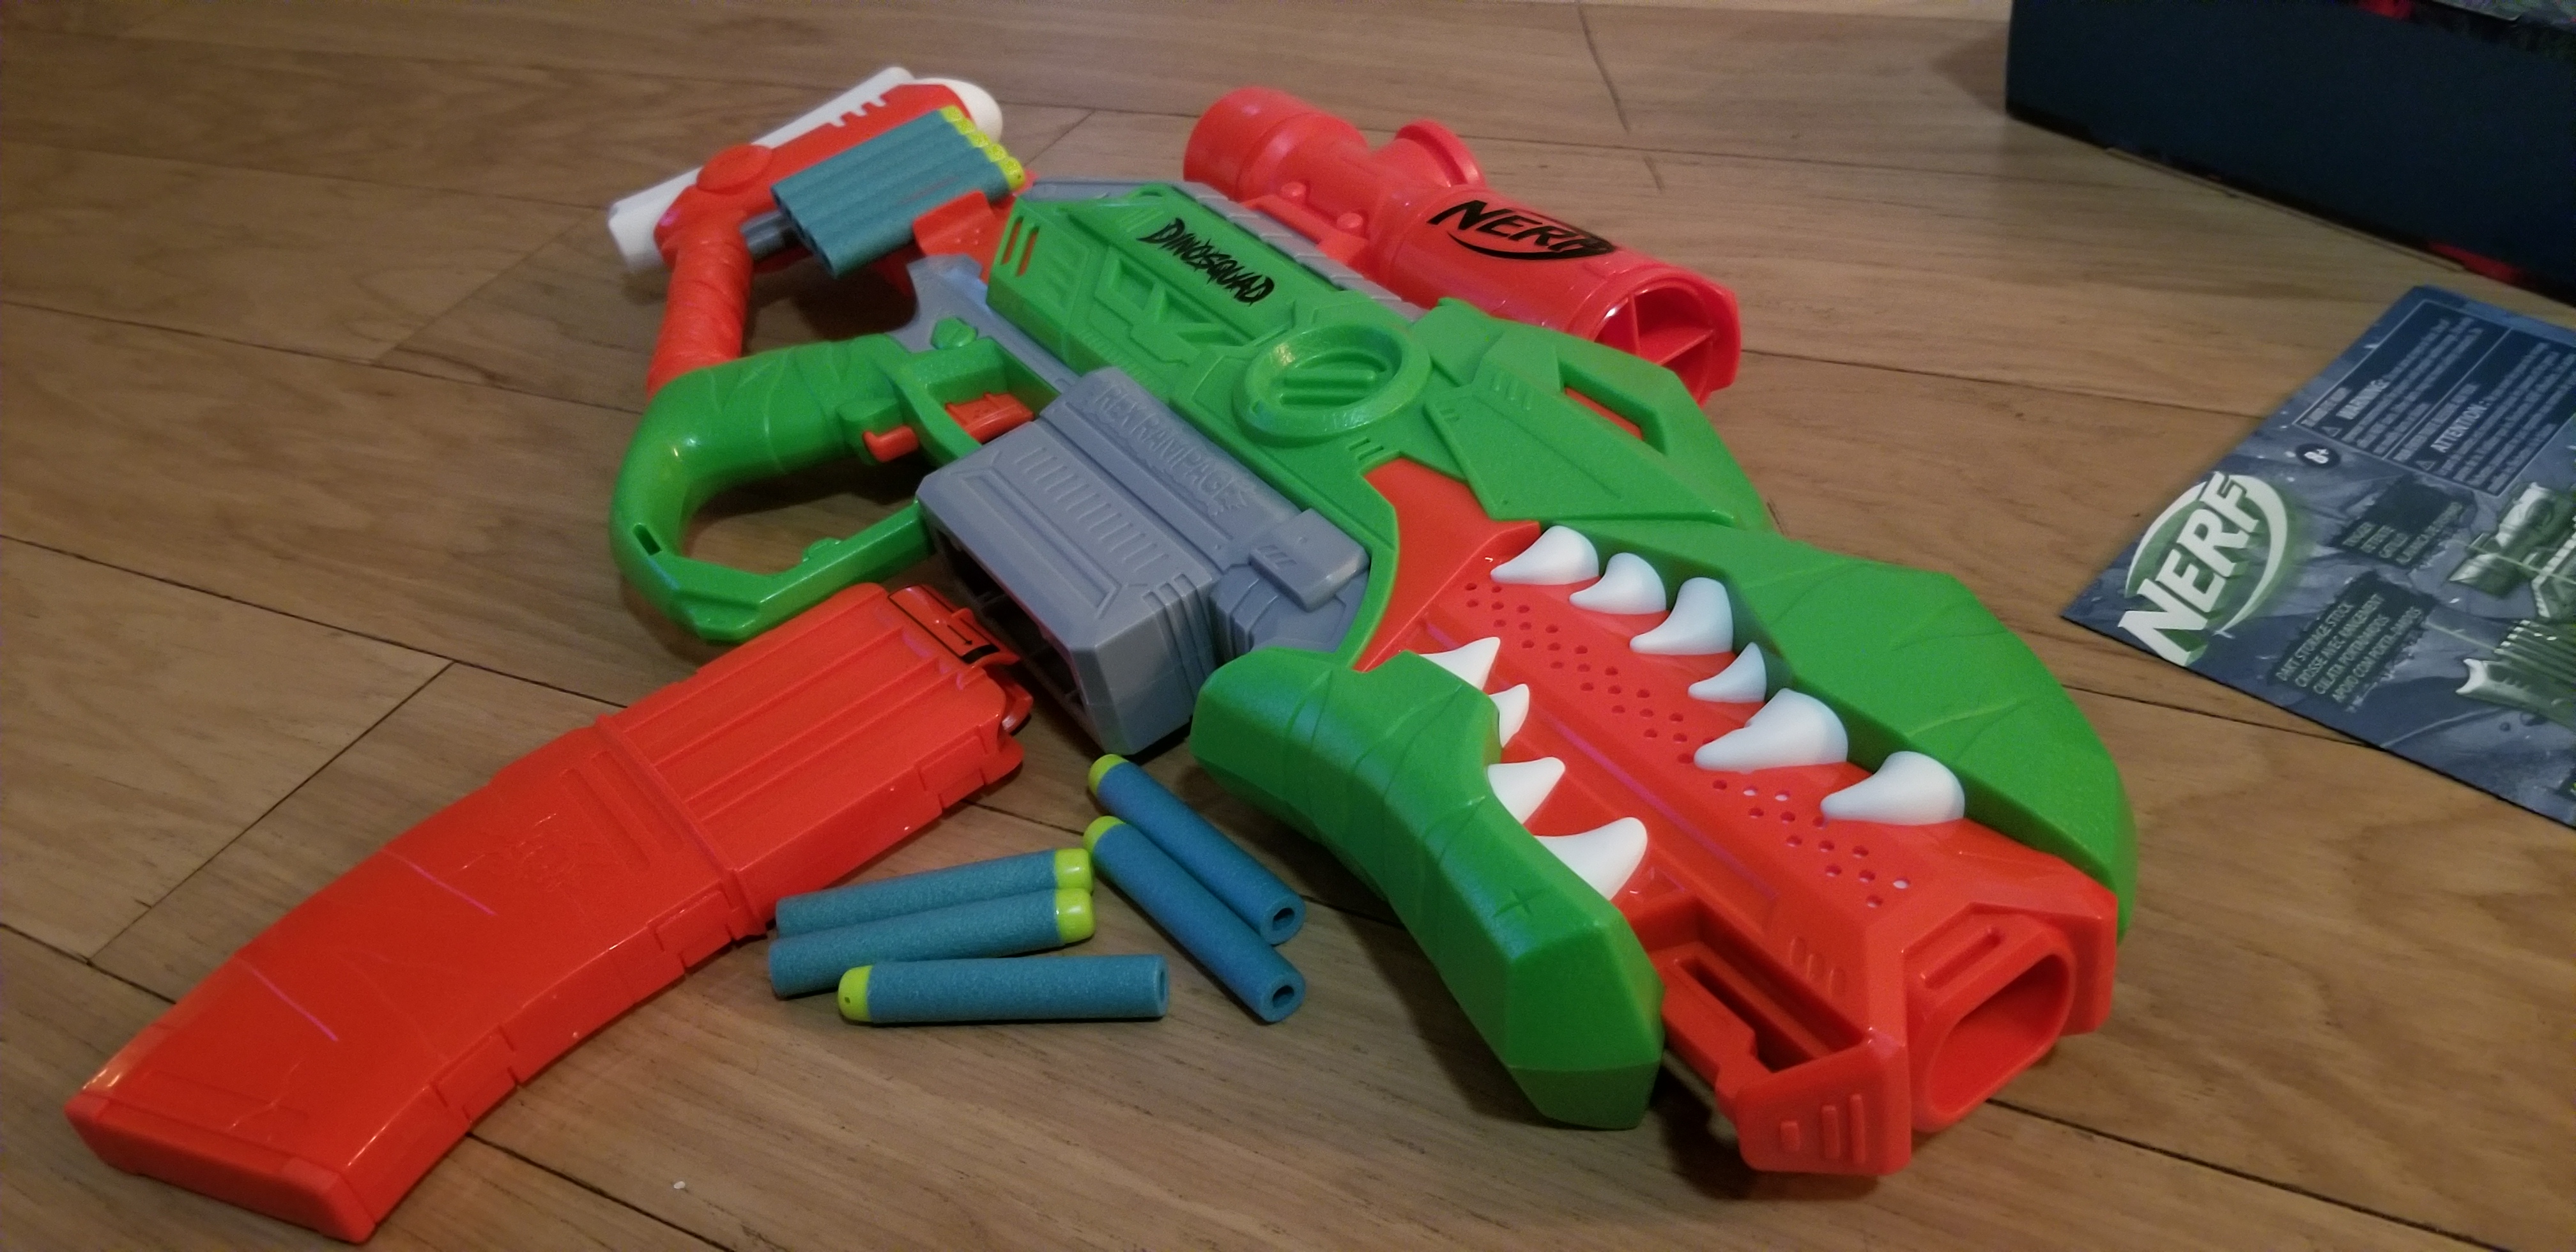 Nerf DinoSquad Rex-Rampage - Nerf